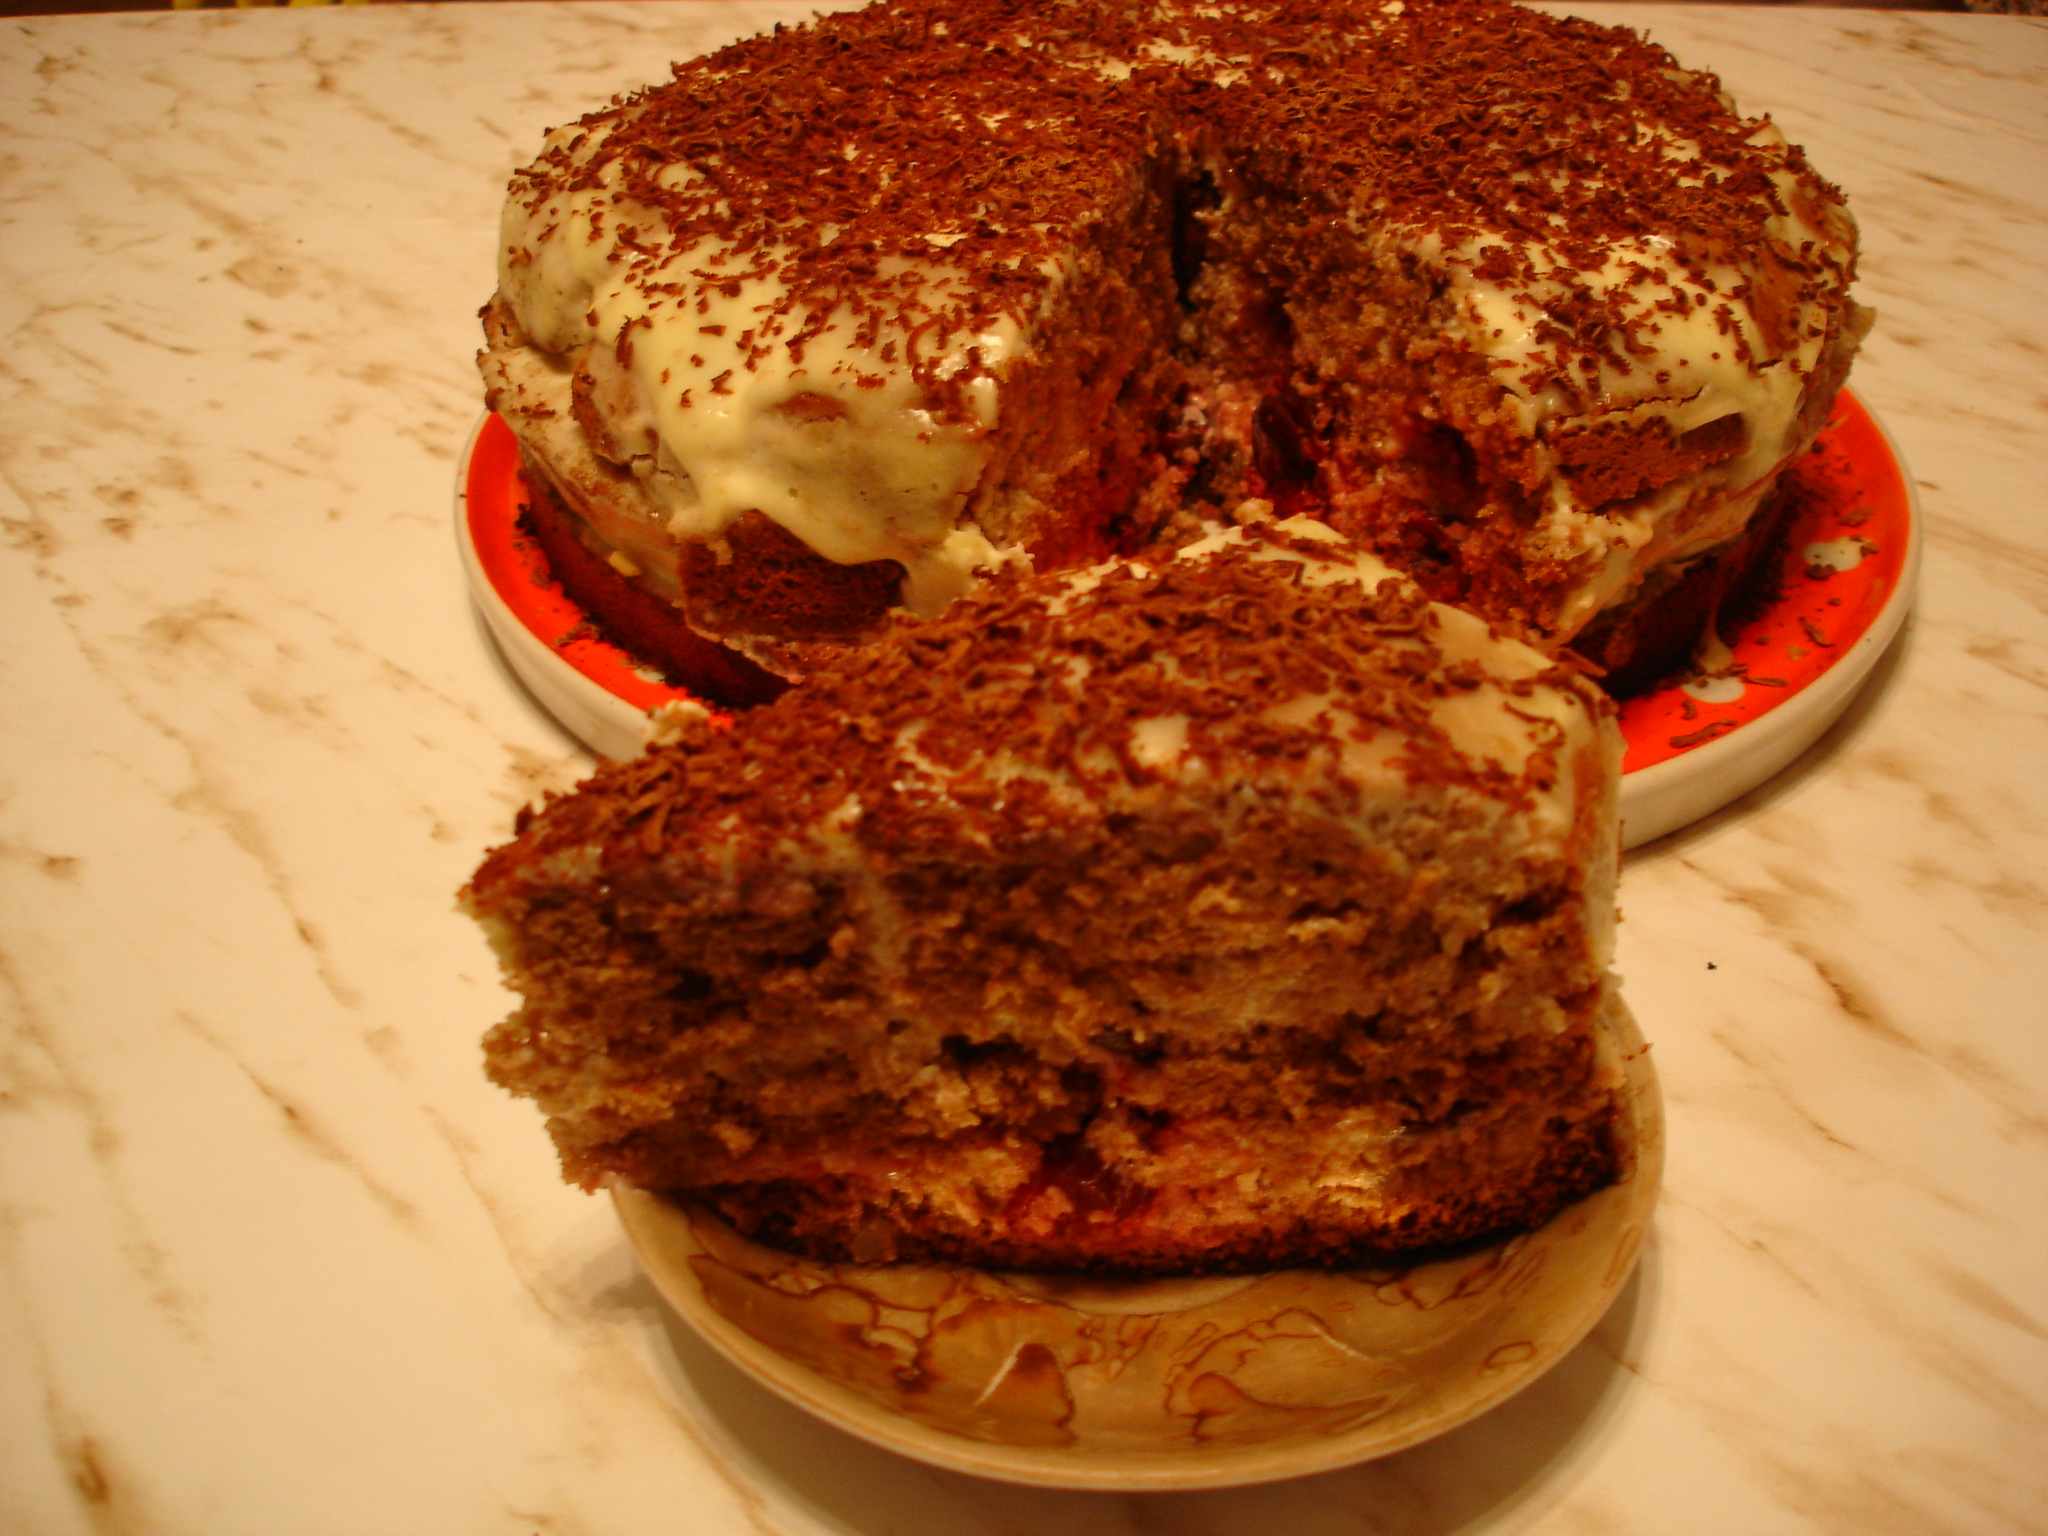 Рецепт Торта Шоколадница С Фото